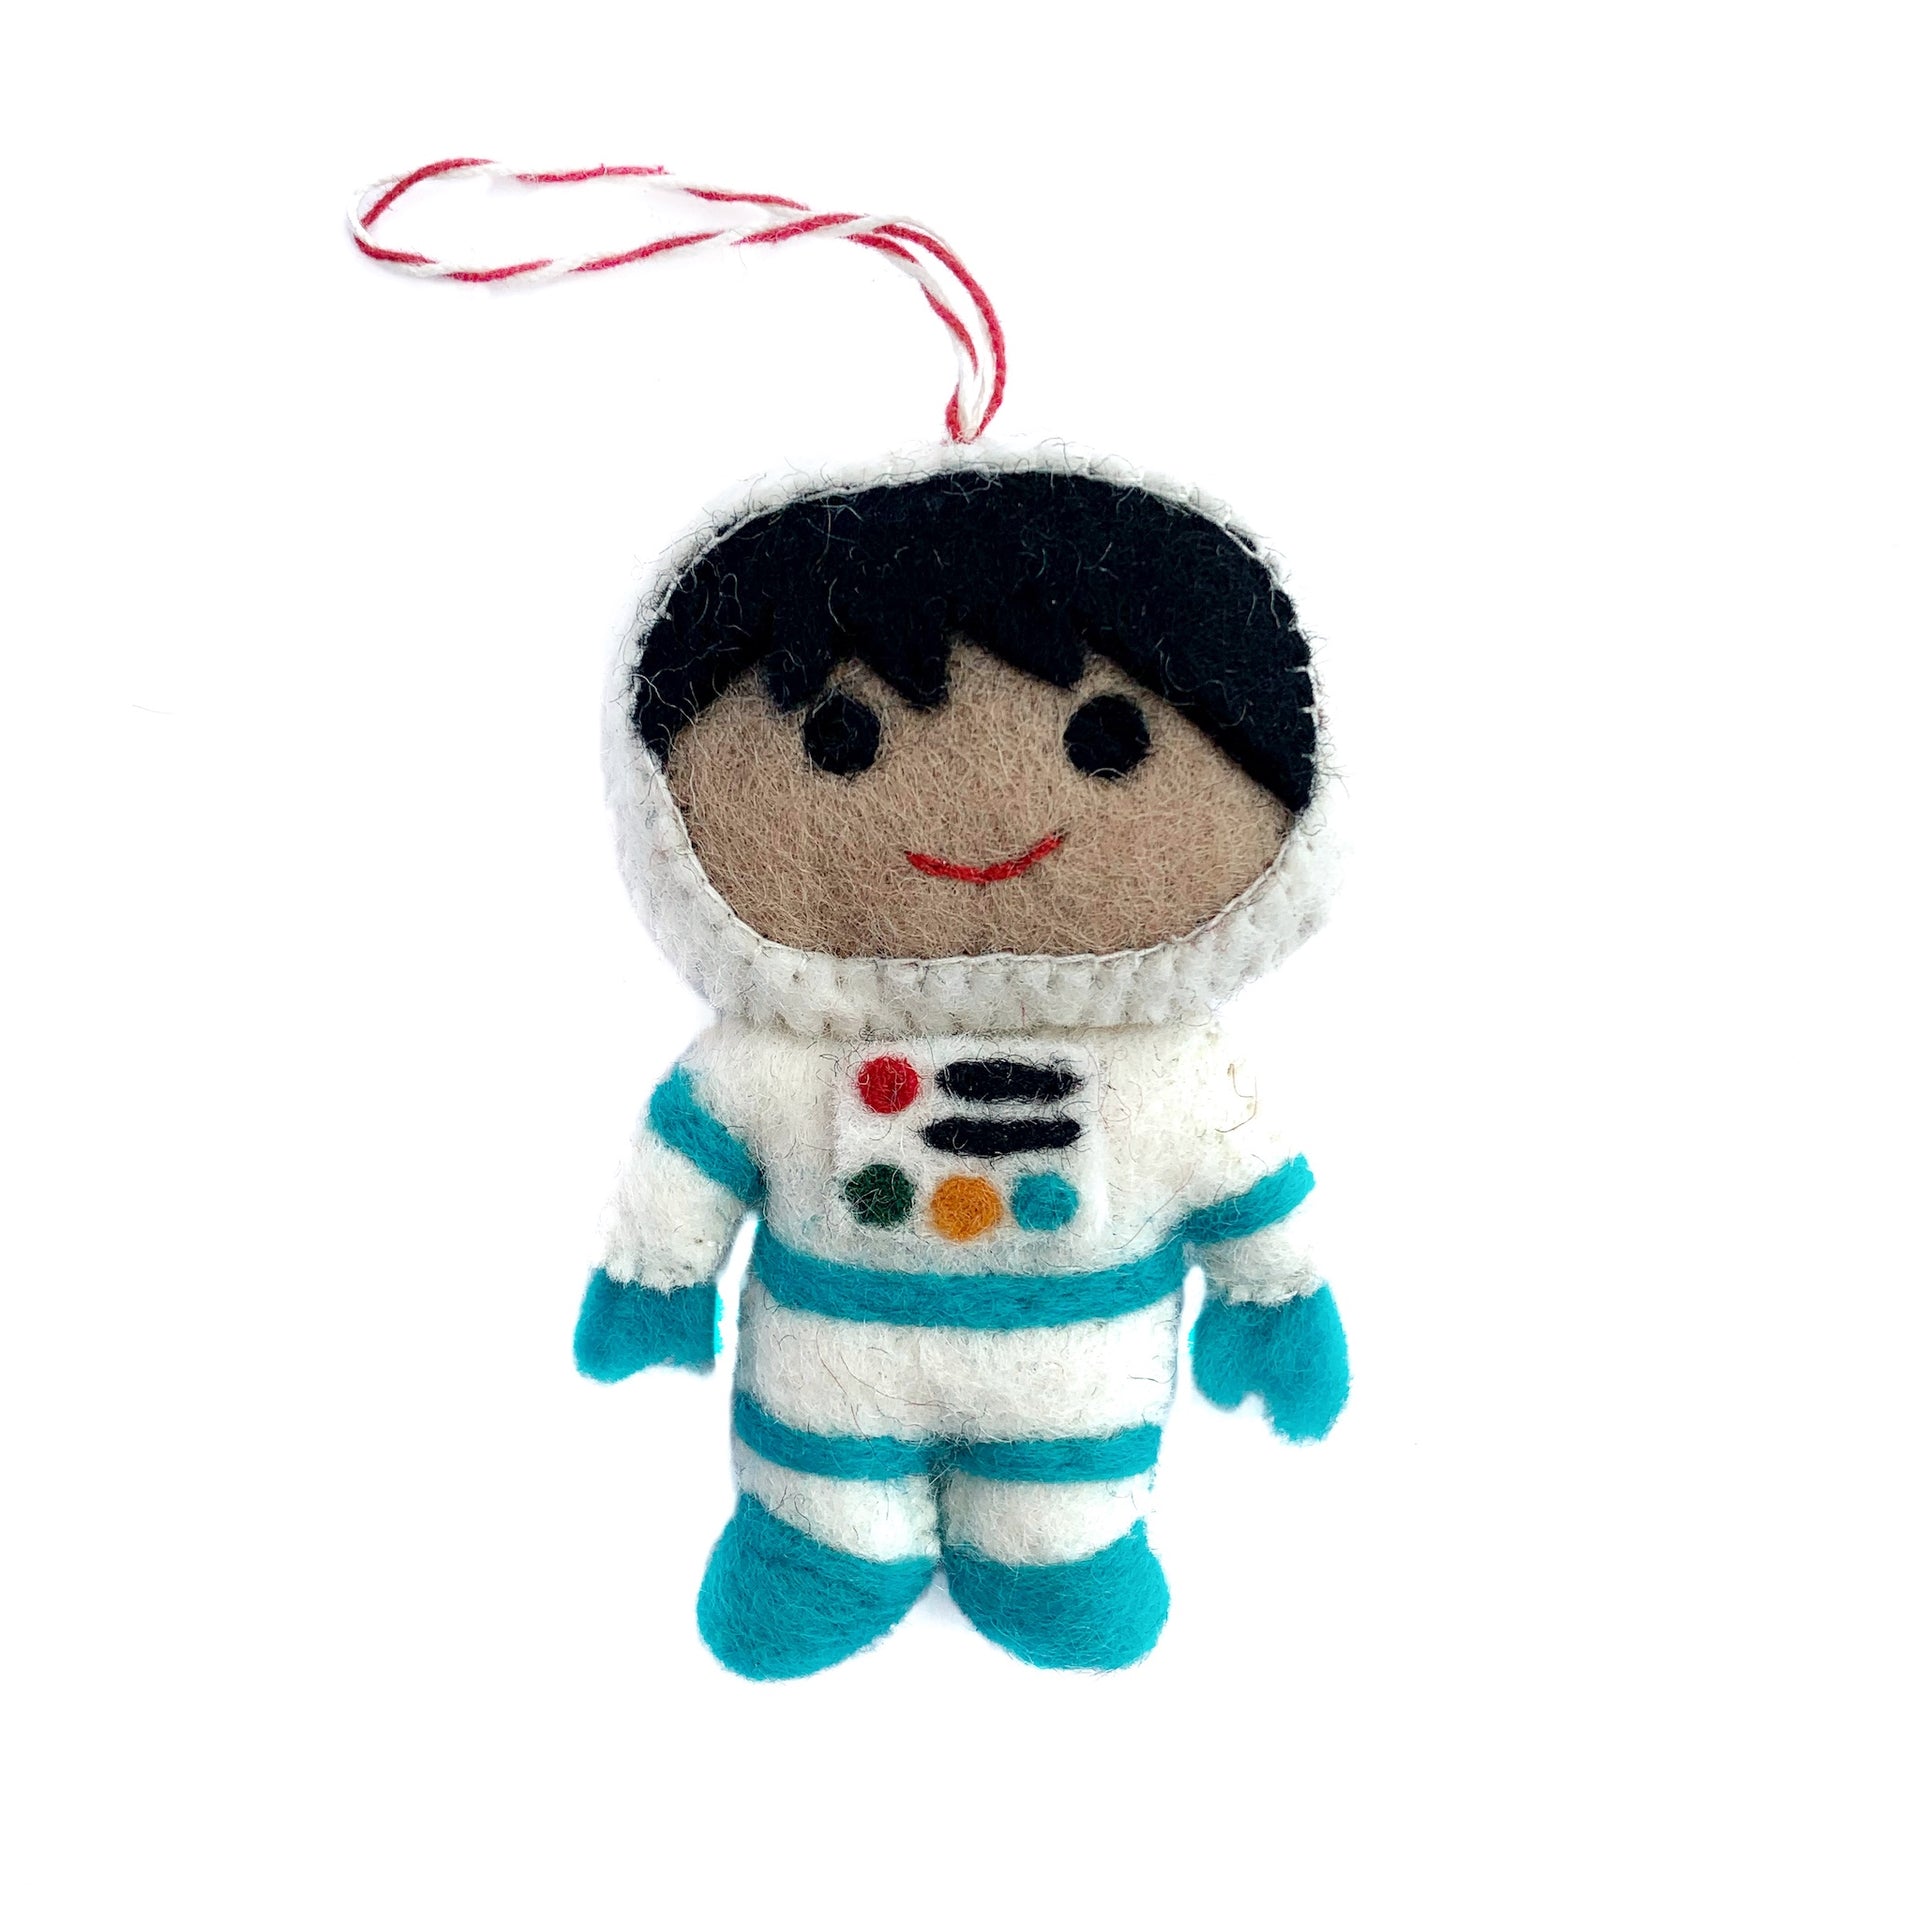 Little Boy Kid Astronaut Christmas Ornaments made of felt wool by Ornaments 4 Orphans, a fair trade company.